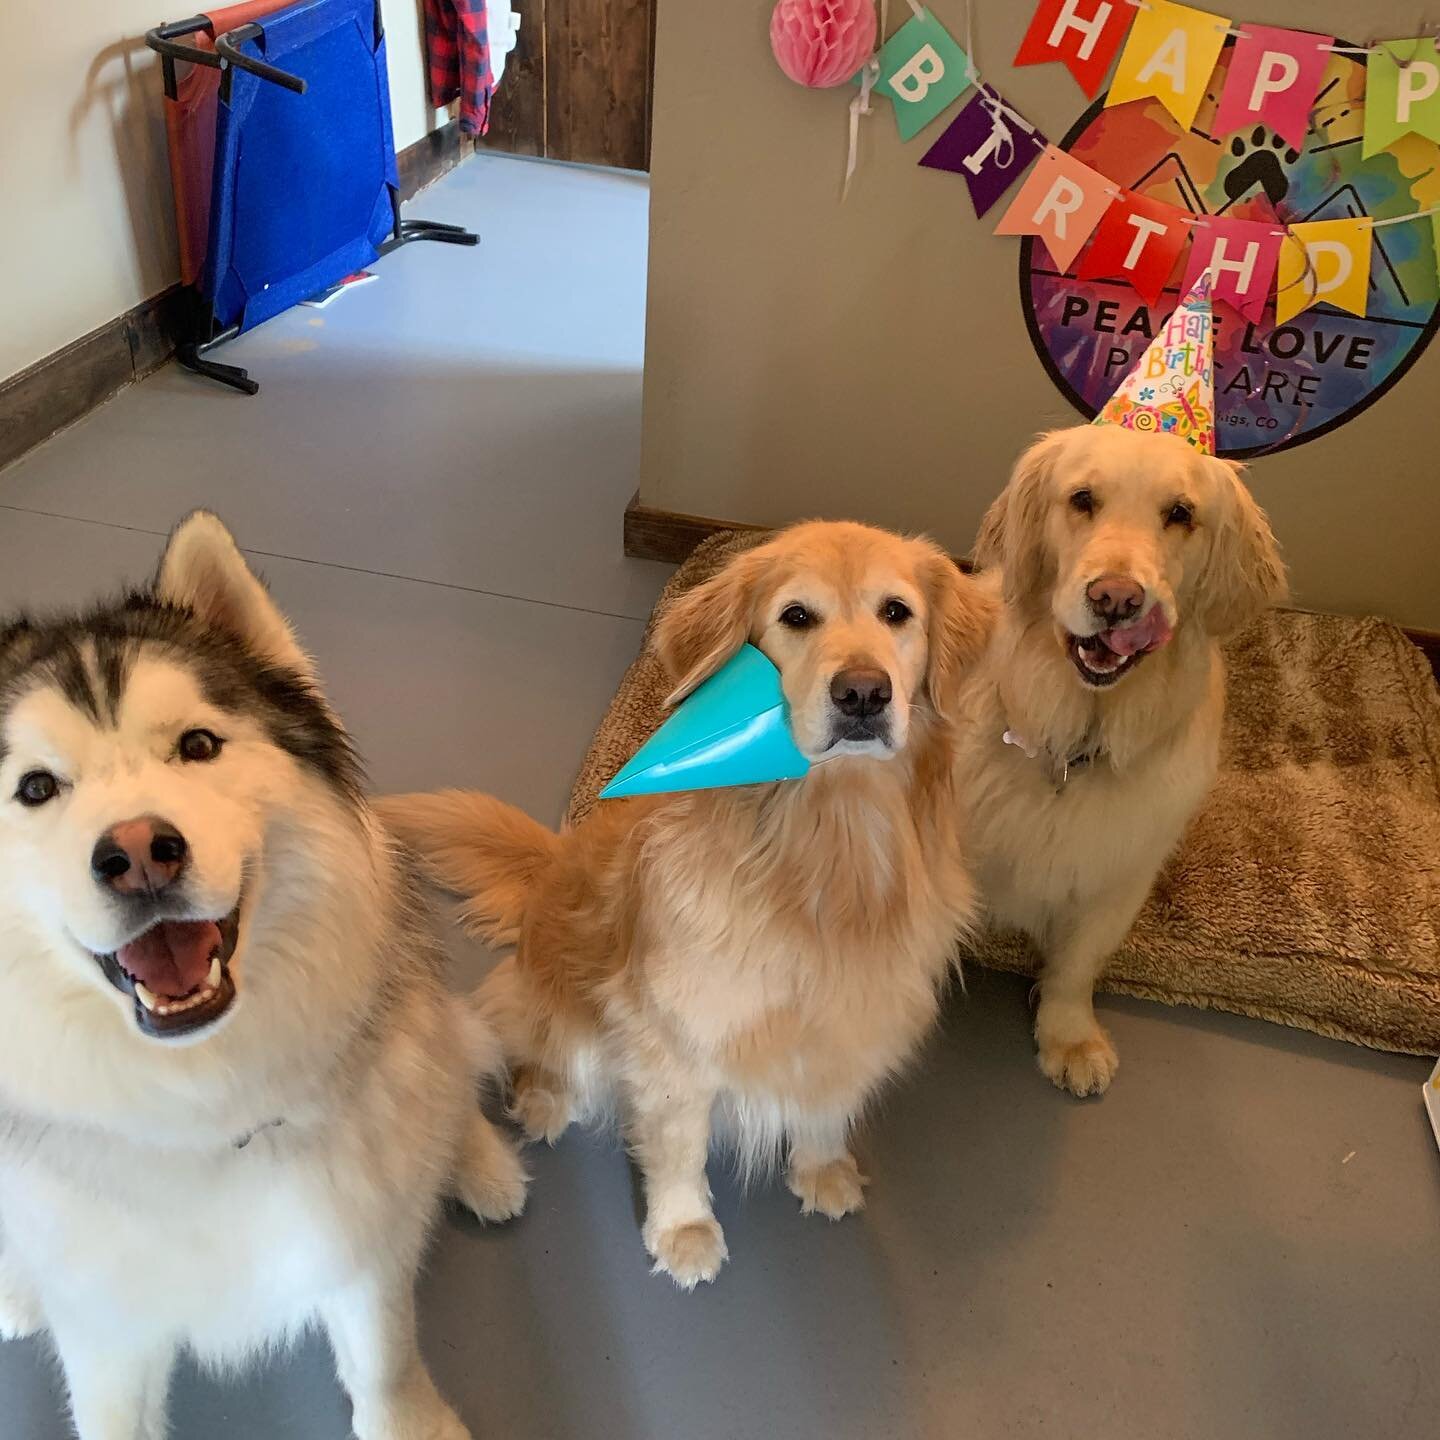 Happy Birthday Cleo!  The big 3!  Looks like Boone celebrated a little too much!  We love you Cleo!  #peacelovepetcare #boonedaboozer #steamboatdogs #steamboatdigsdogs #birthdaydog